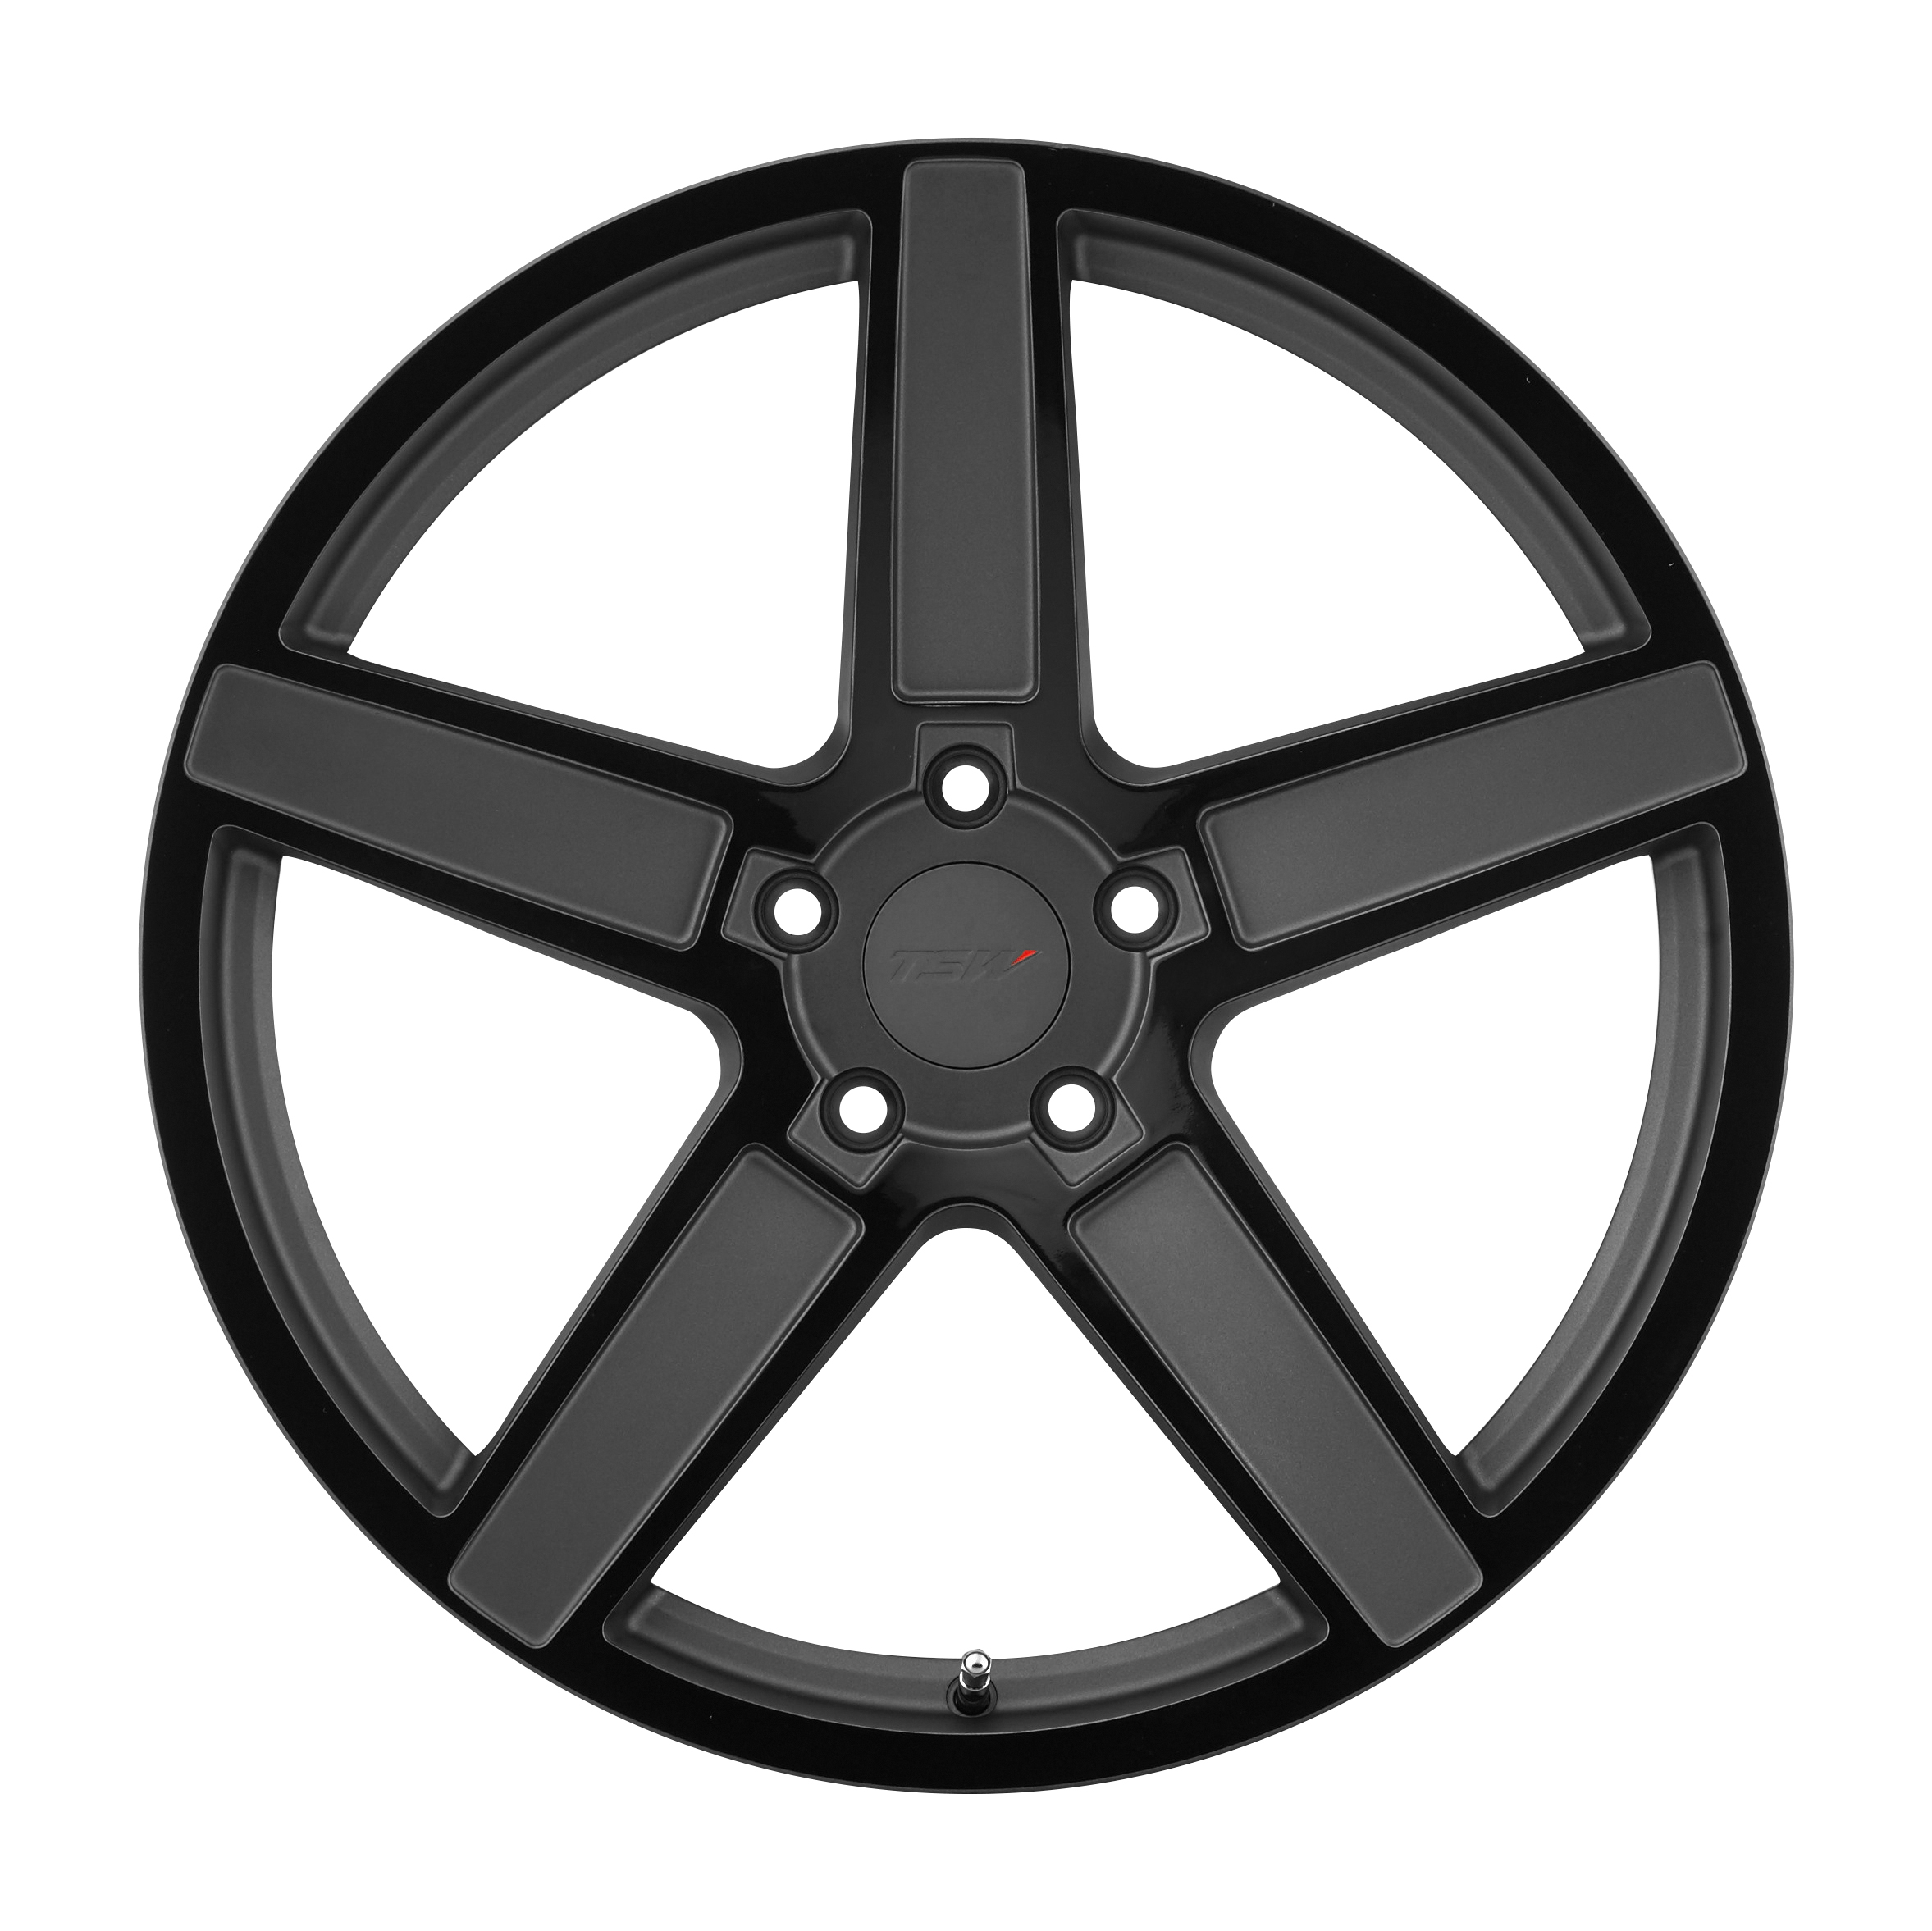 TSW Introduces the Ascent Wheel, a Distinctive New 5-spoke Aluminum ...